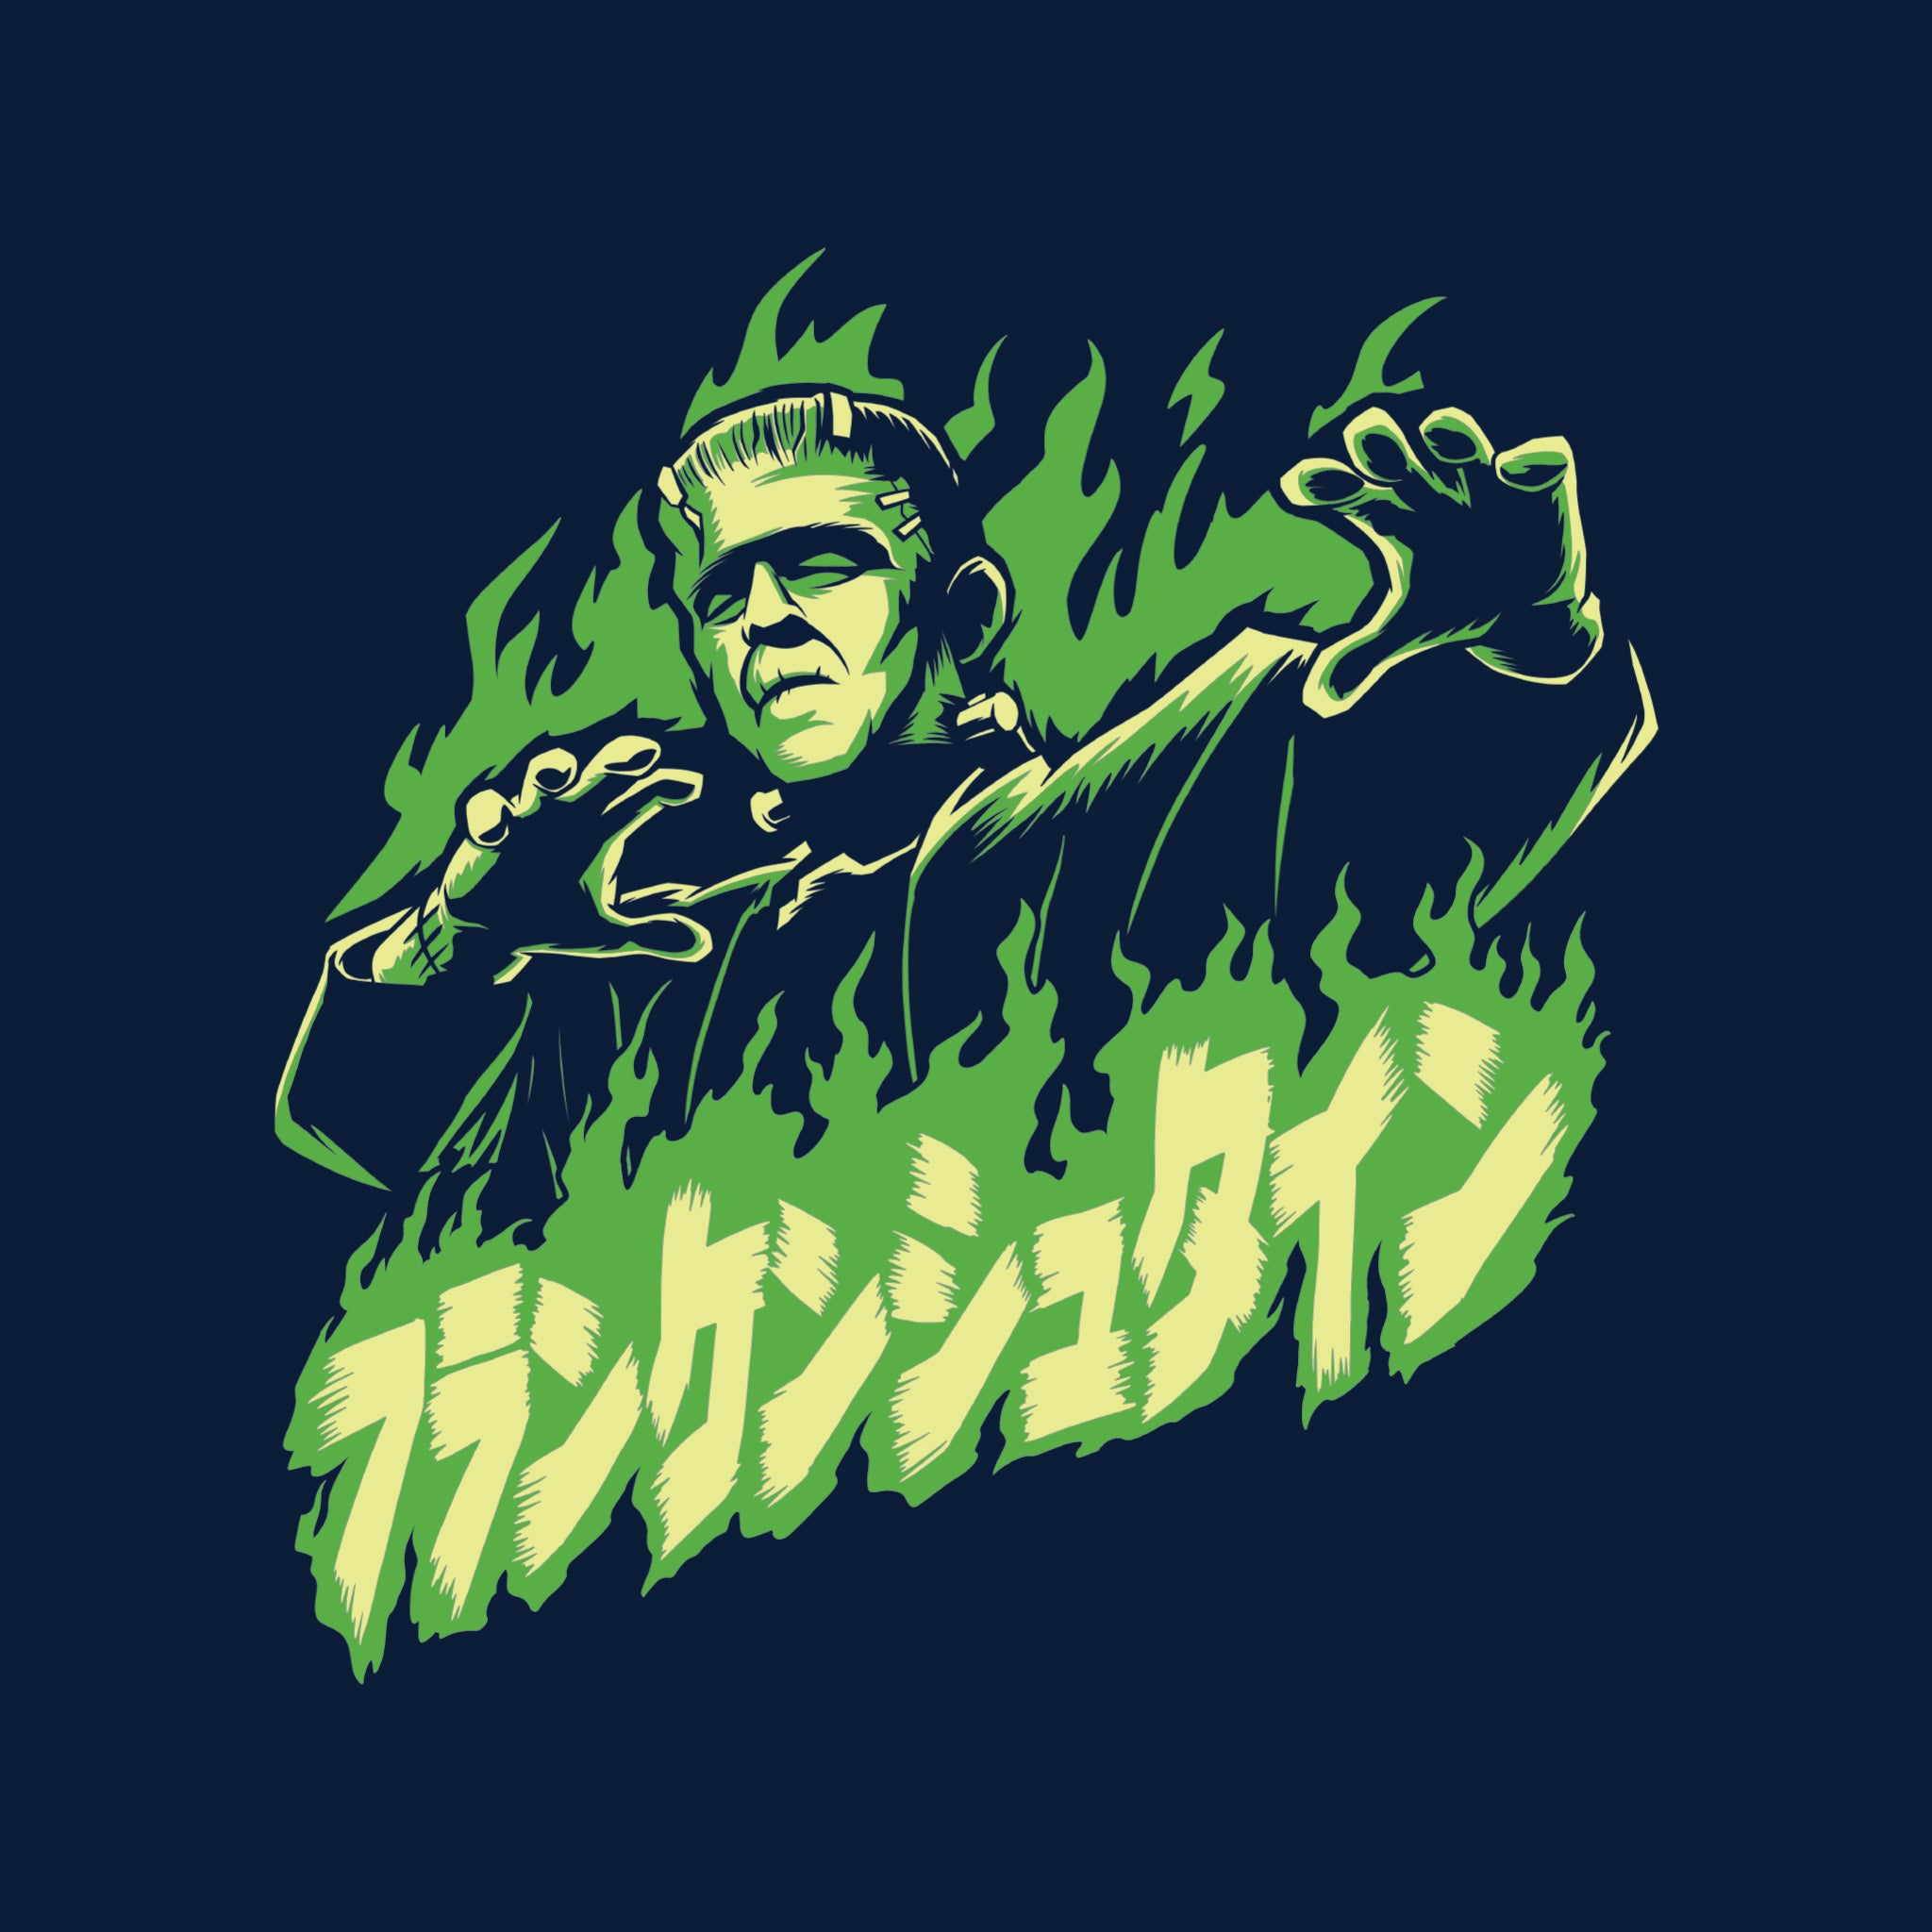 Universal Monsters Frankenstein Fire T-shirt